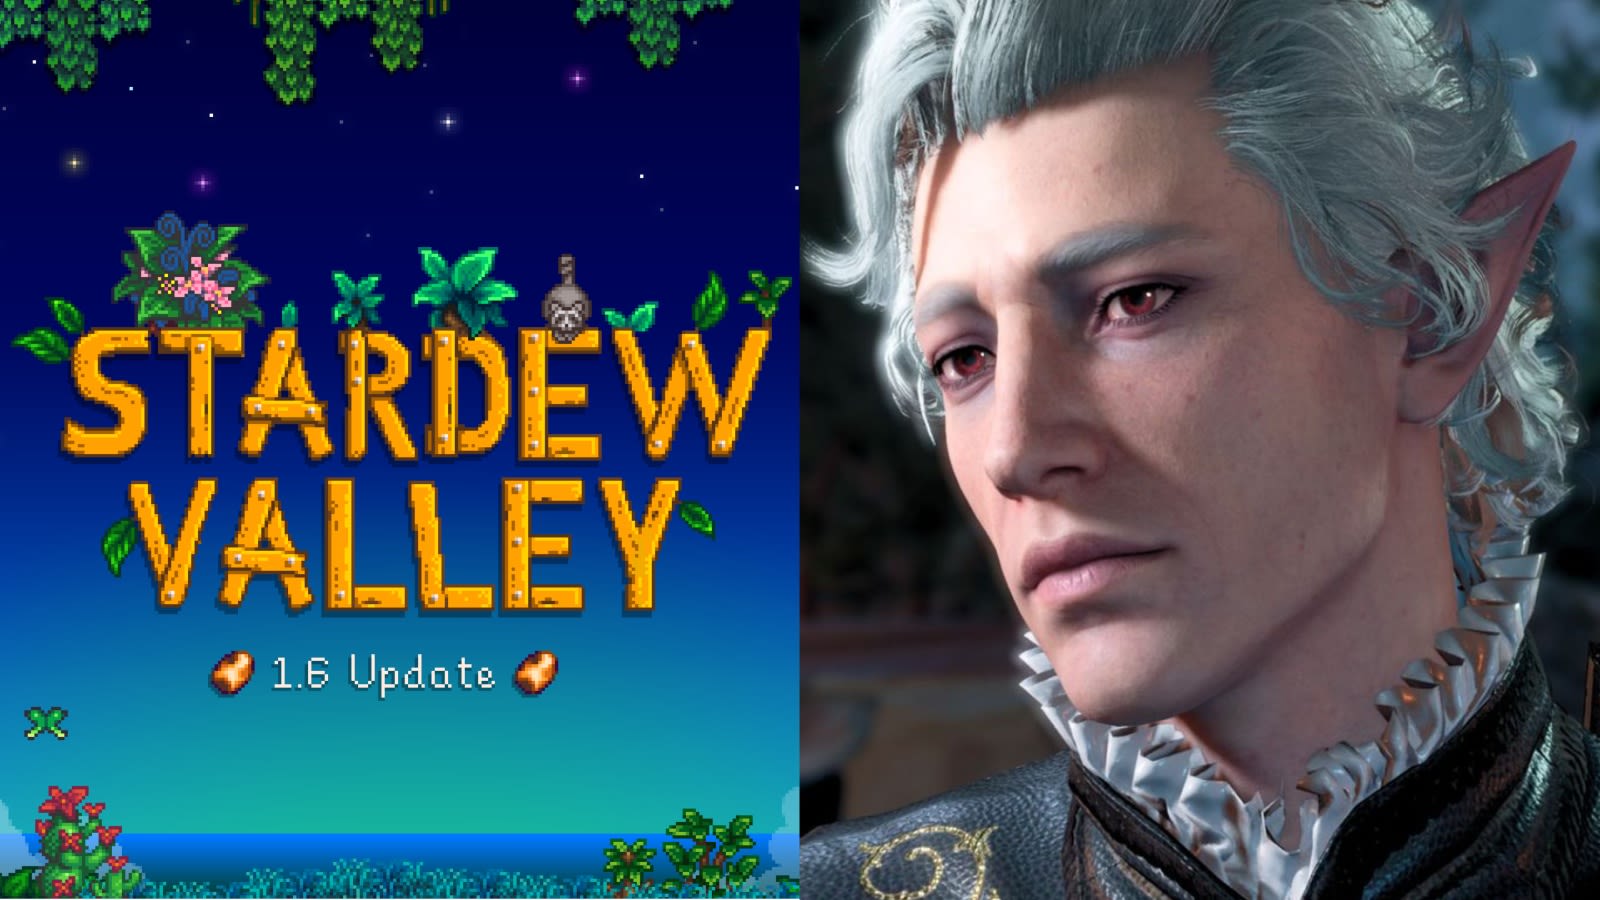 Stardew Valley meets Baldur’s Gate 3 characters in new exciting mod - Dexerto